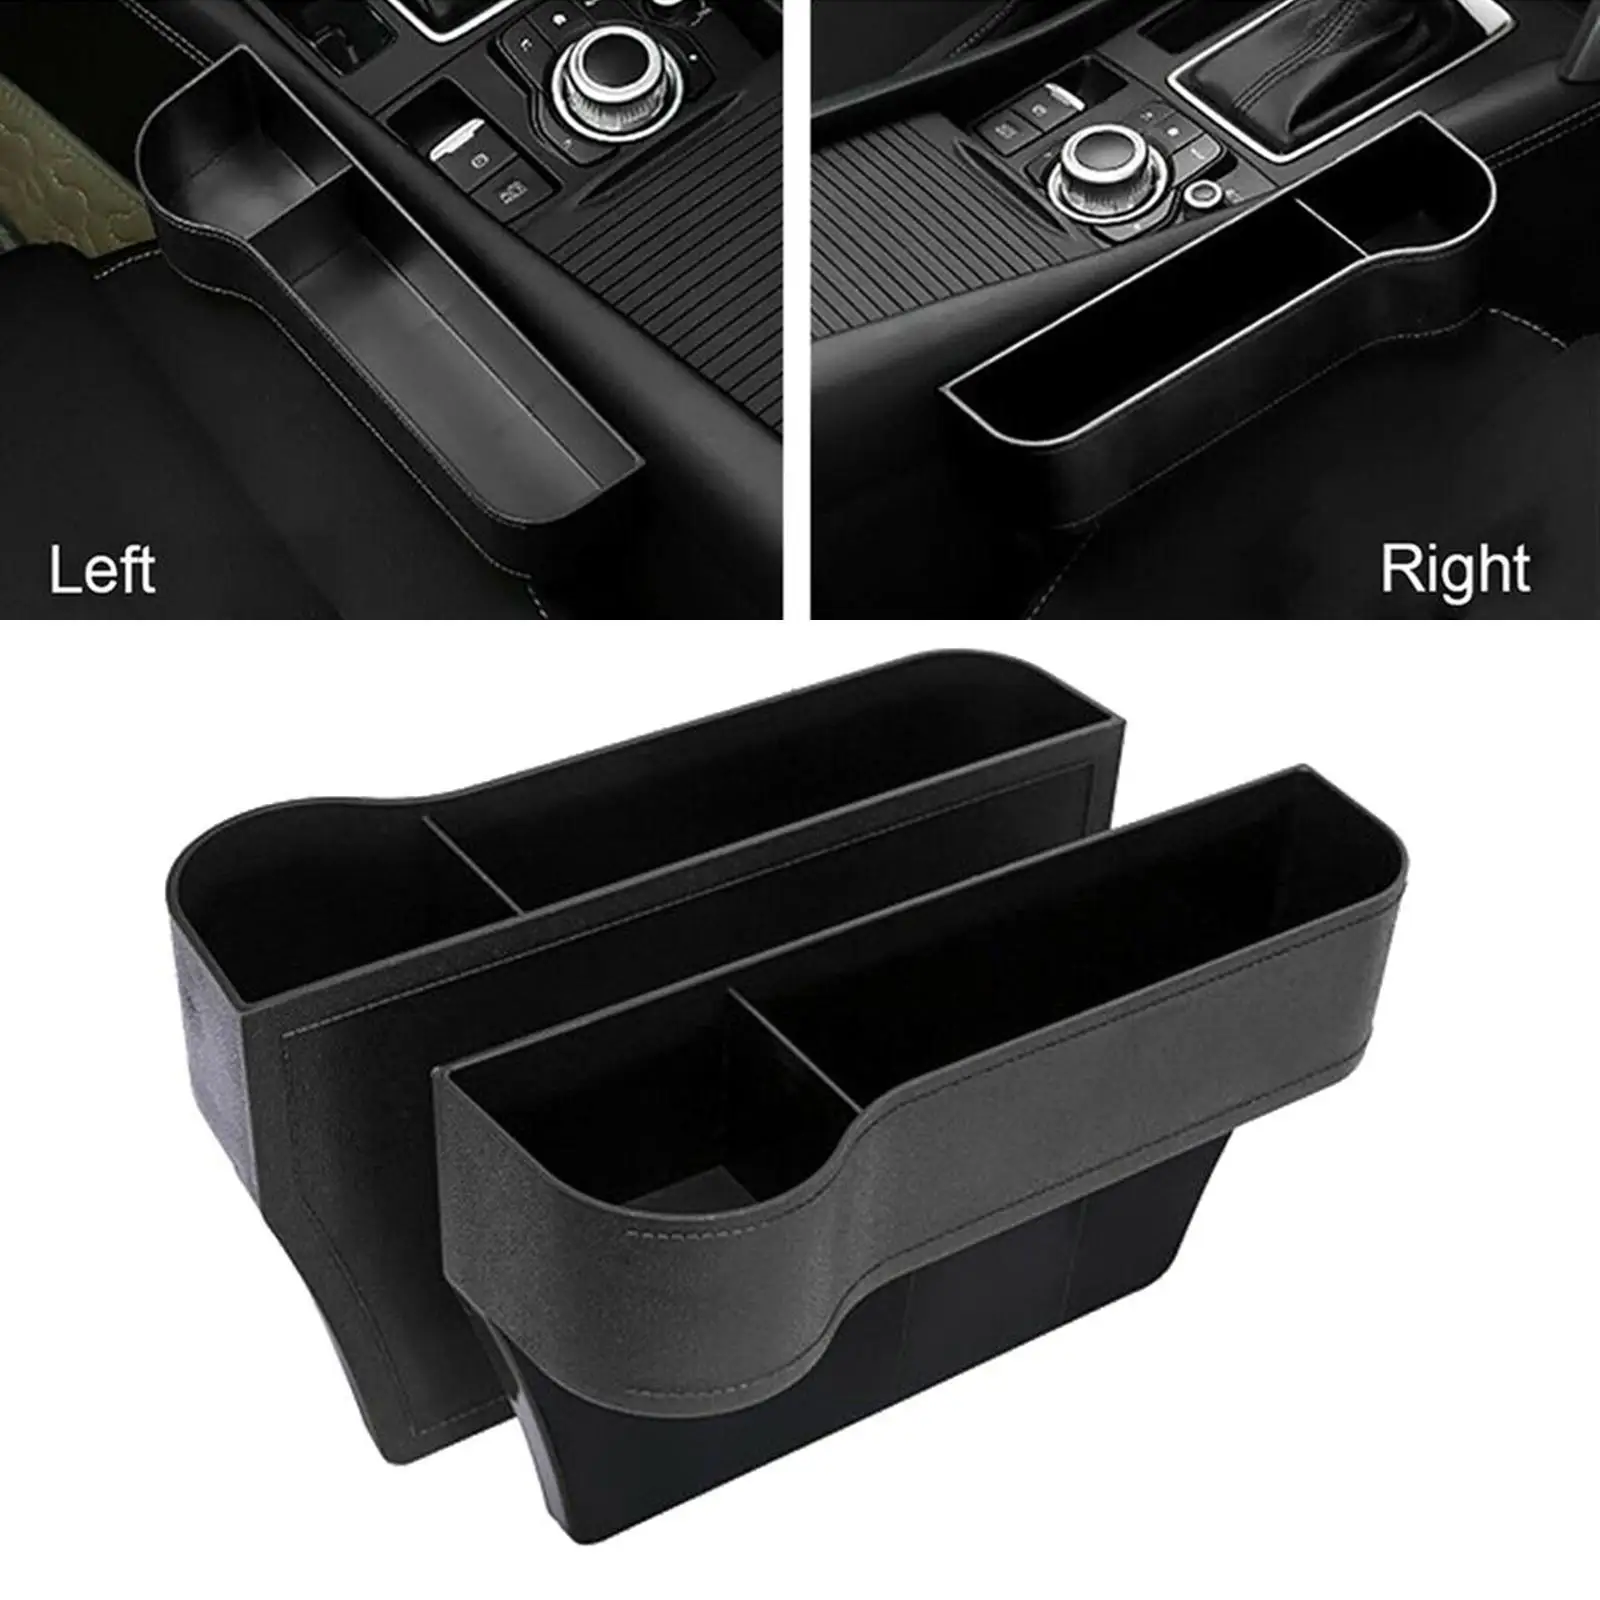 2Pcs Auto Car Seat Gap Catcher Between Seats Organiser Pocket w/Cup Holder for Cellphone Wallet Keys Black